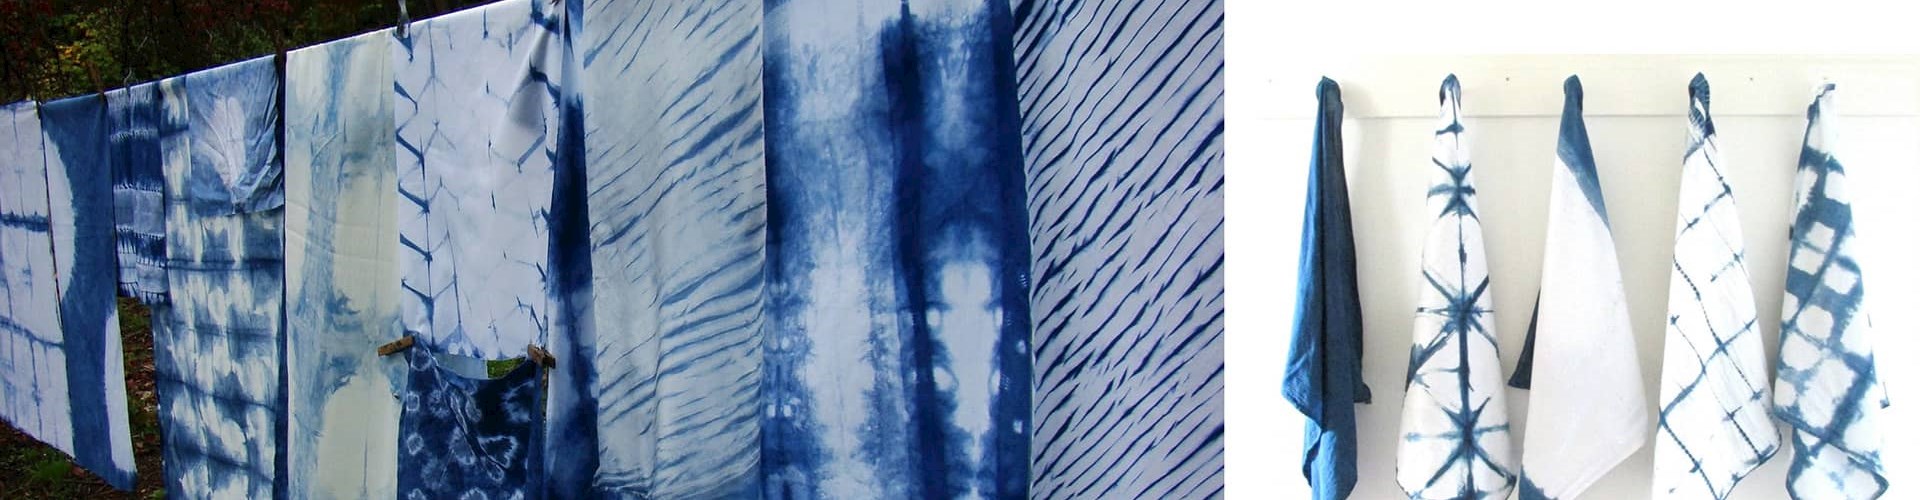 Tekstiler indfarvet med shibori-teknik, kursus i shibori ved FOF Aarhus